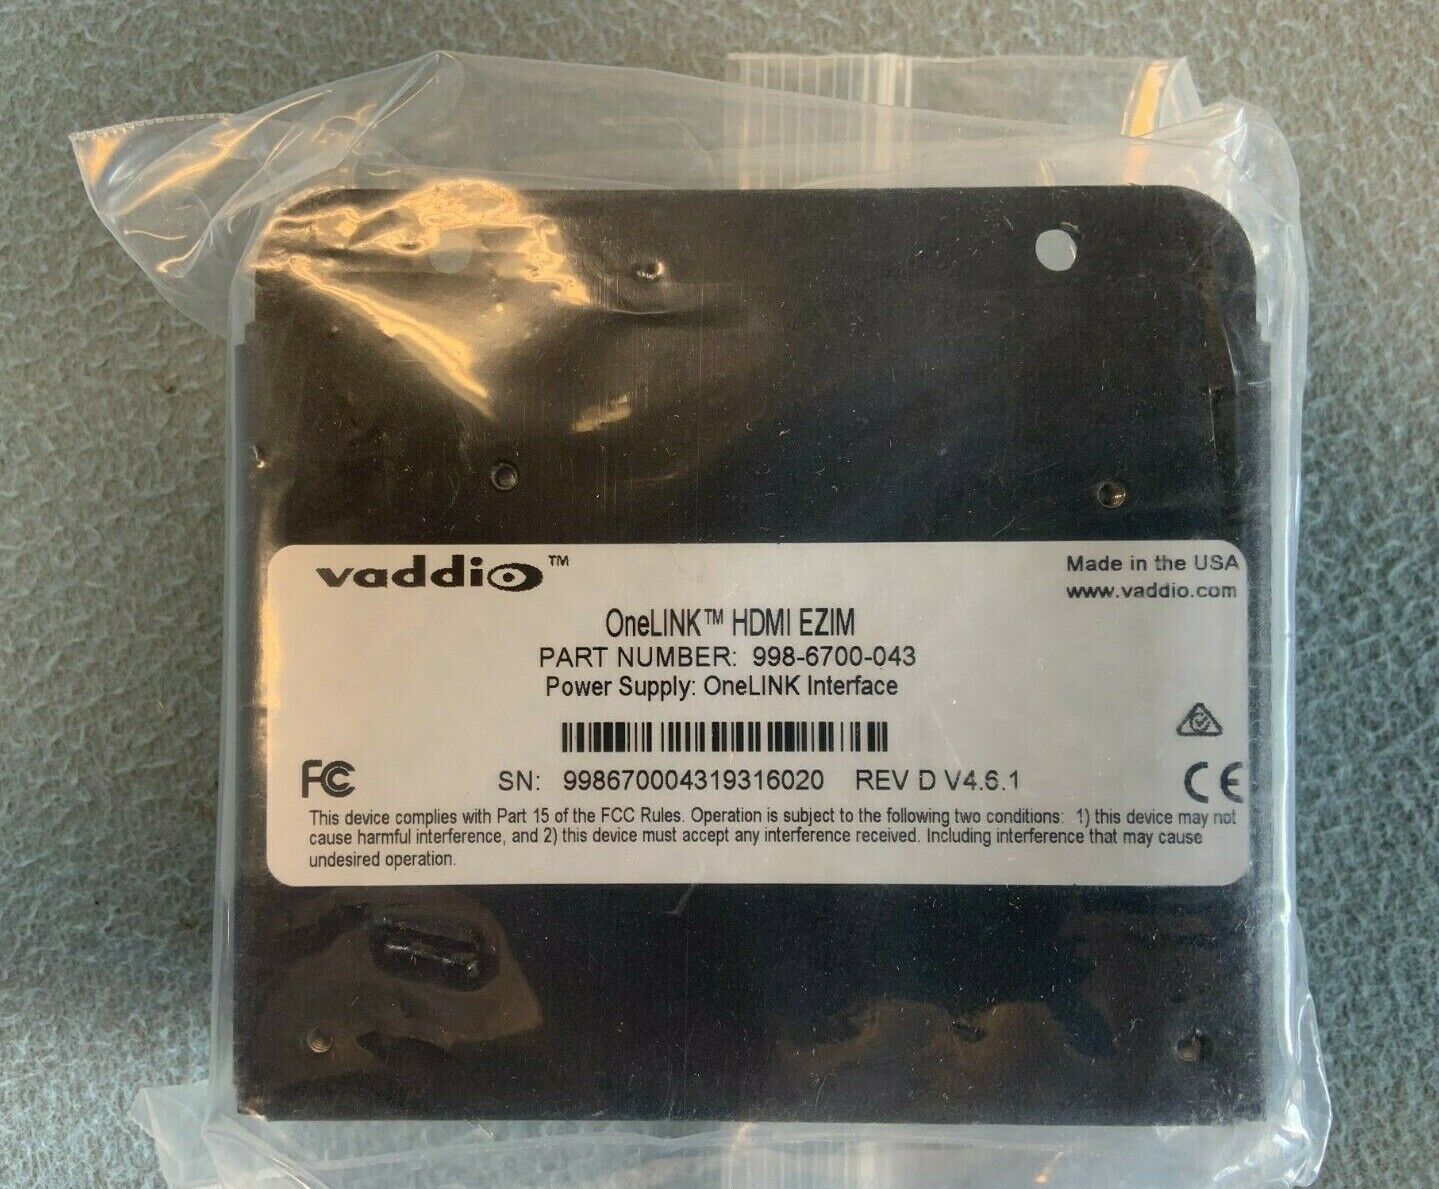 Vaddio 999-9530-000 / OneLINK HDBaseT Extender Set for Sony & Panasonic Cameras